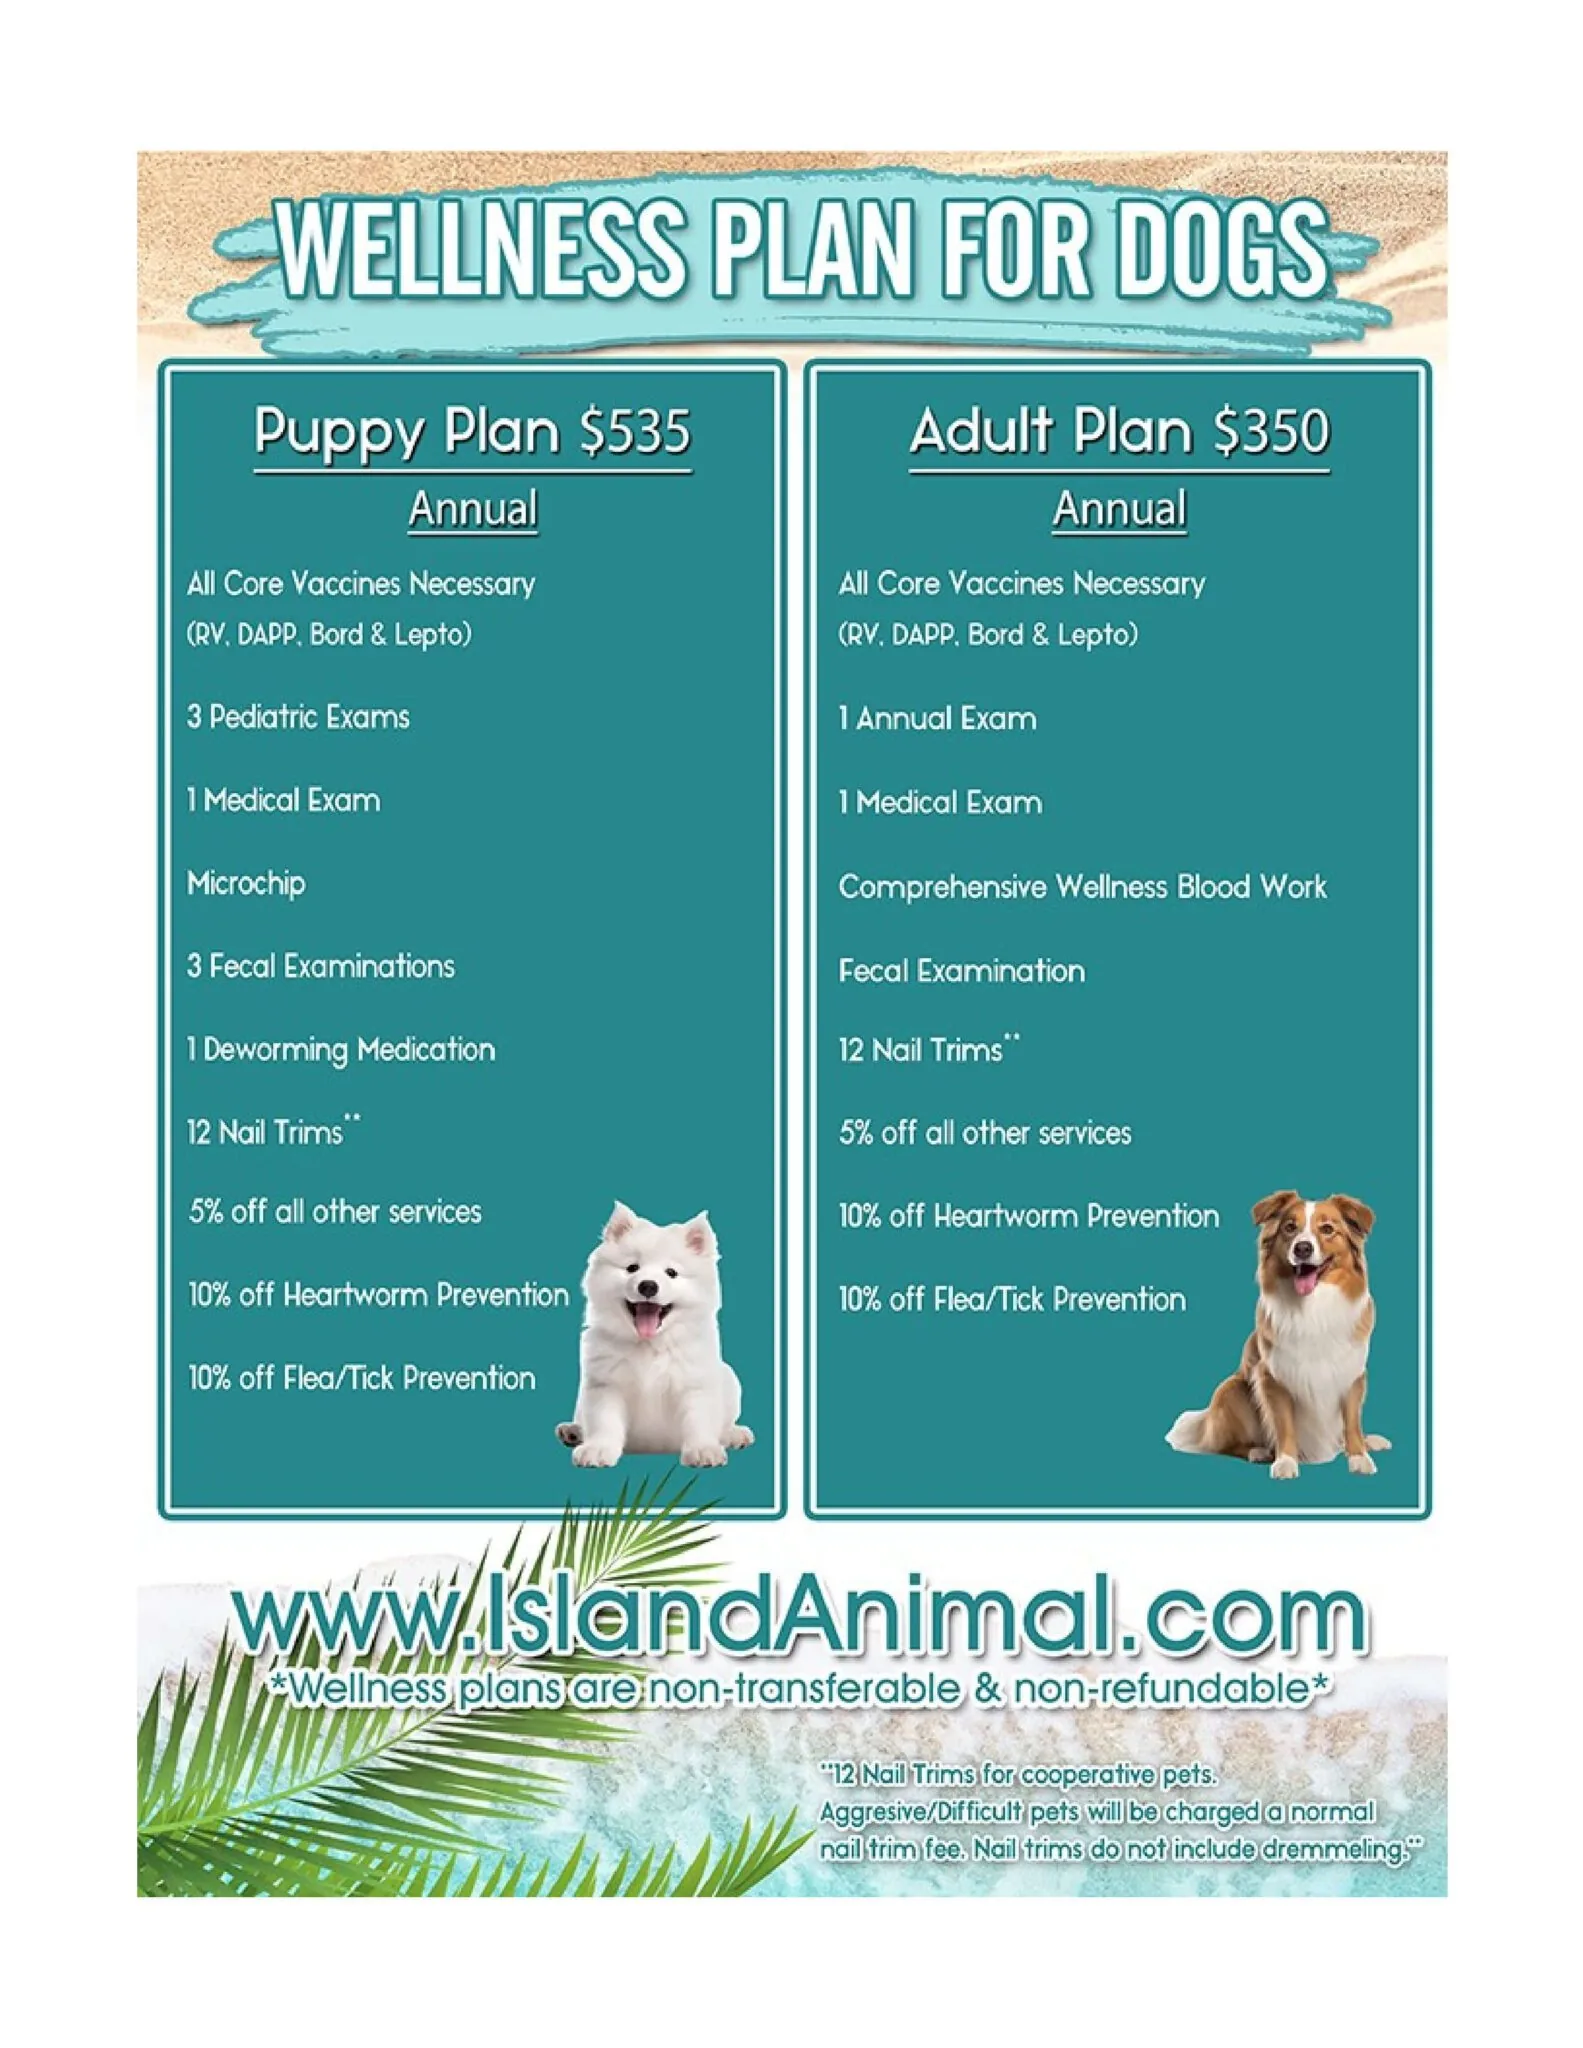 Canine Wellness Plans